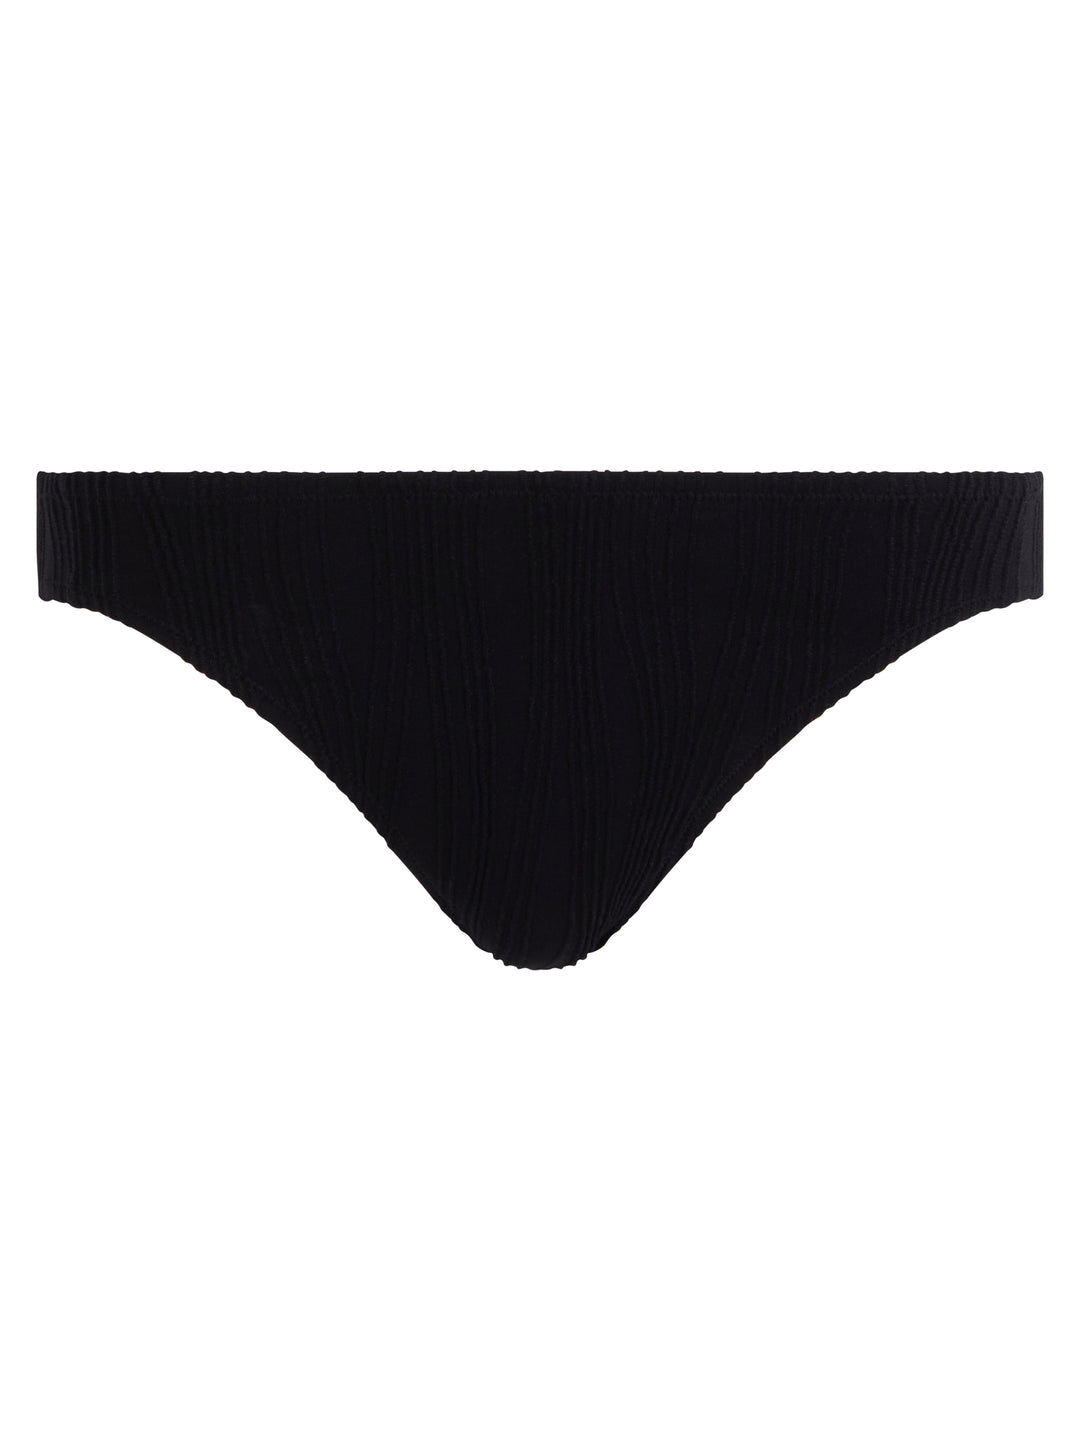 Chantelle Swimwear - Swim One Size Brief Black